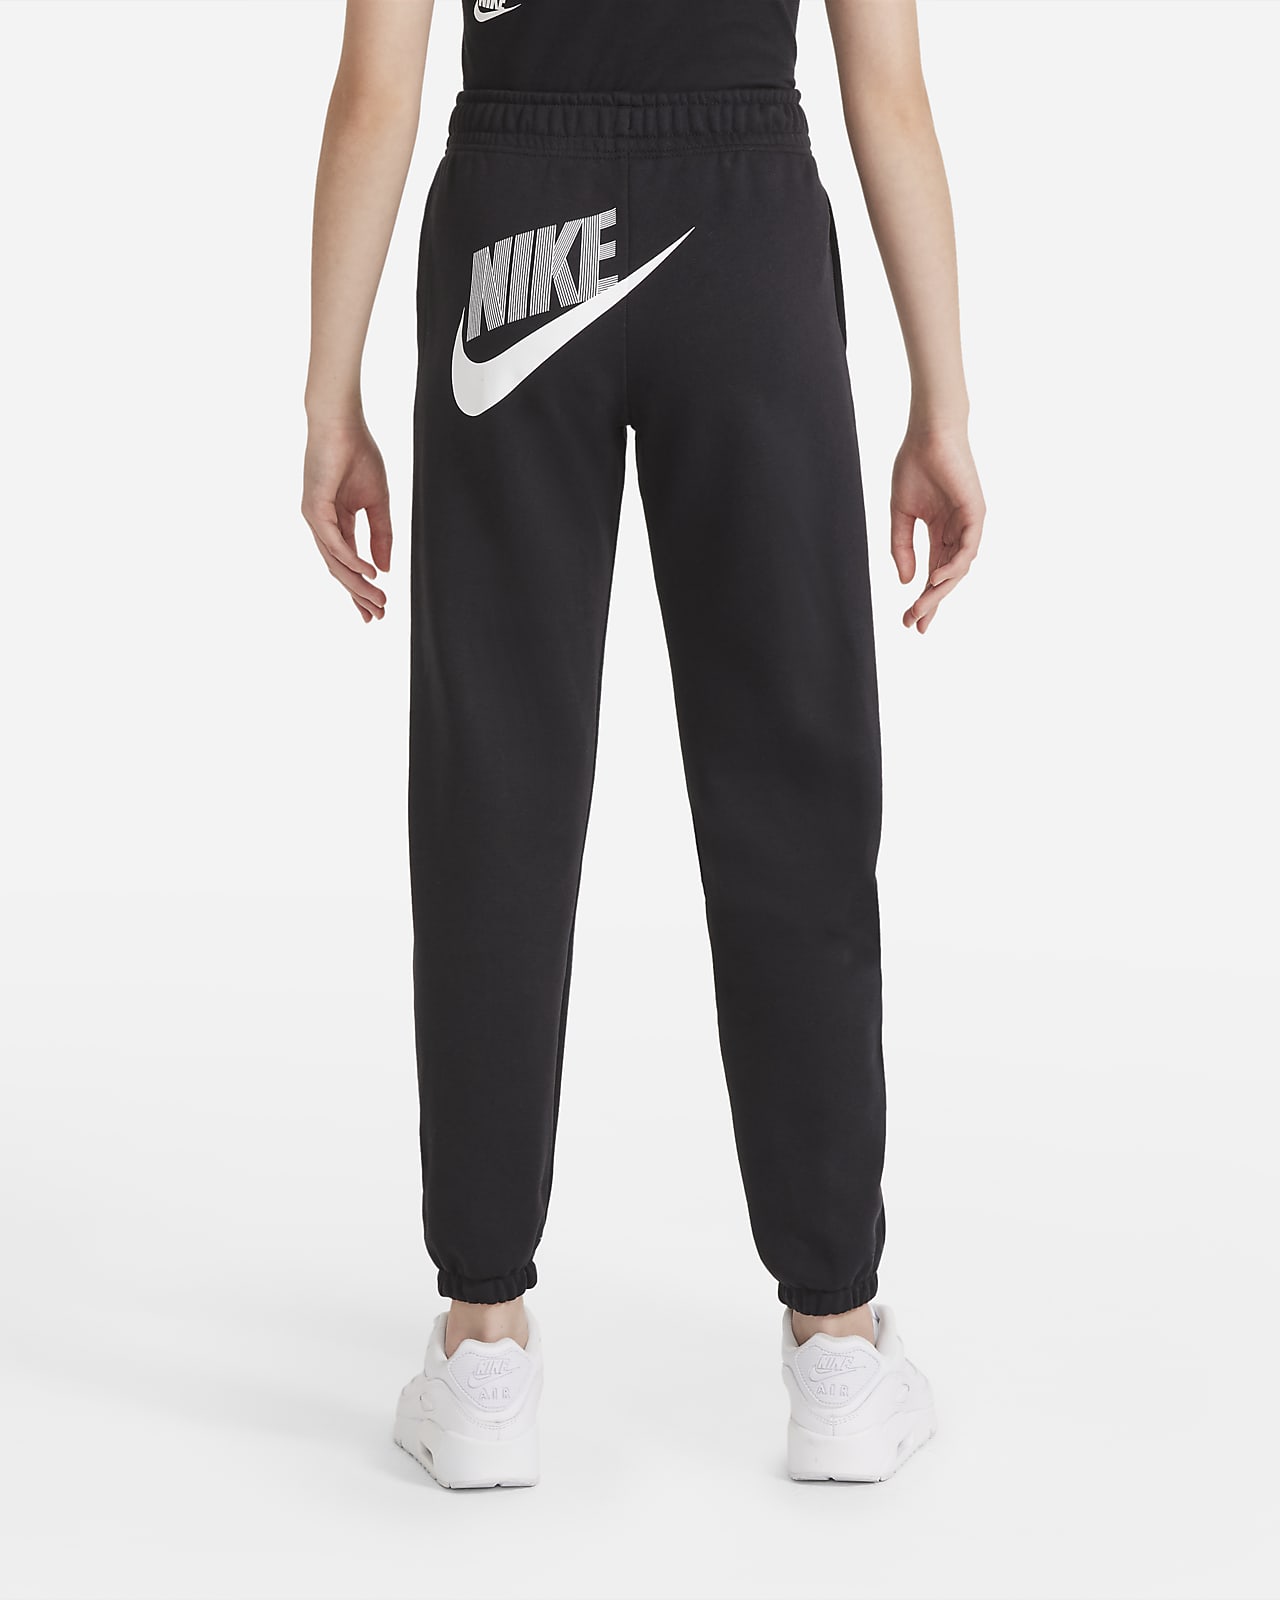 Womens Dance Trousers  Tights Nike UK